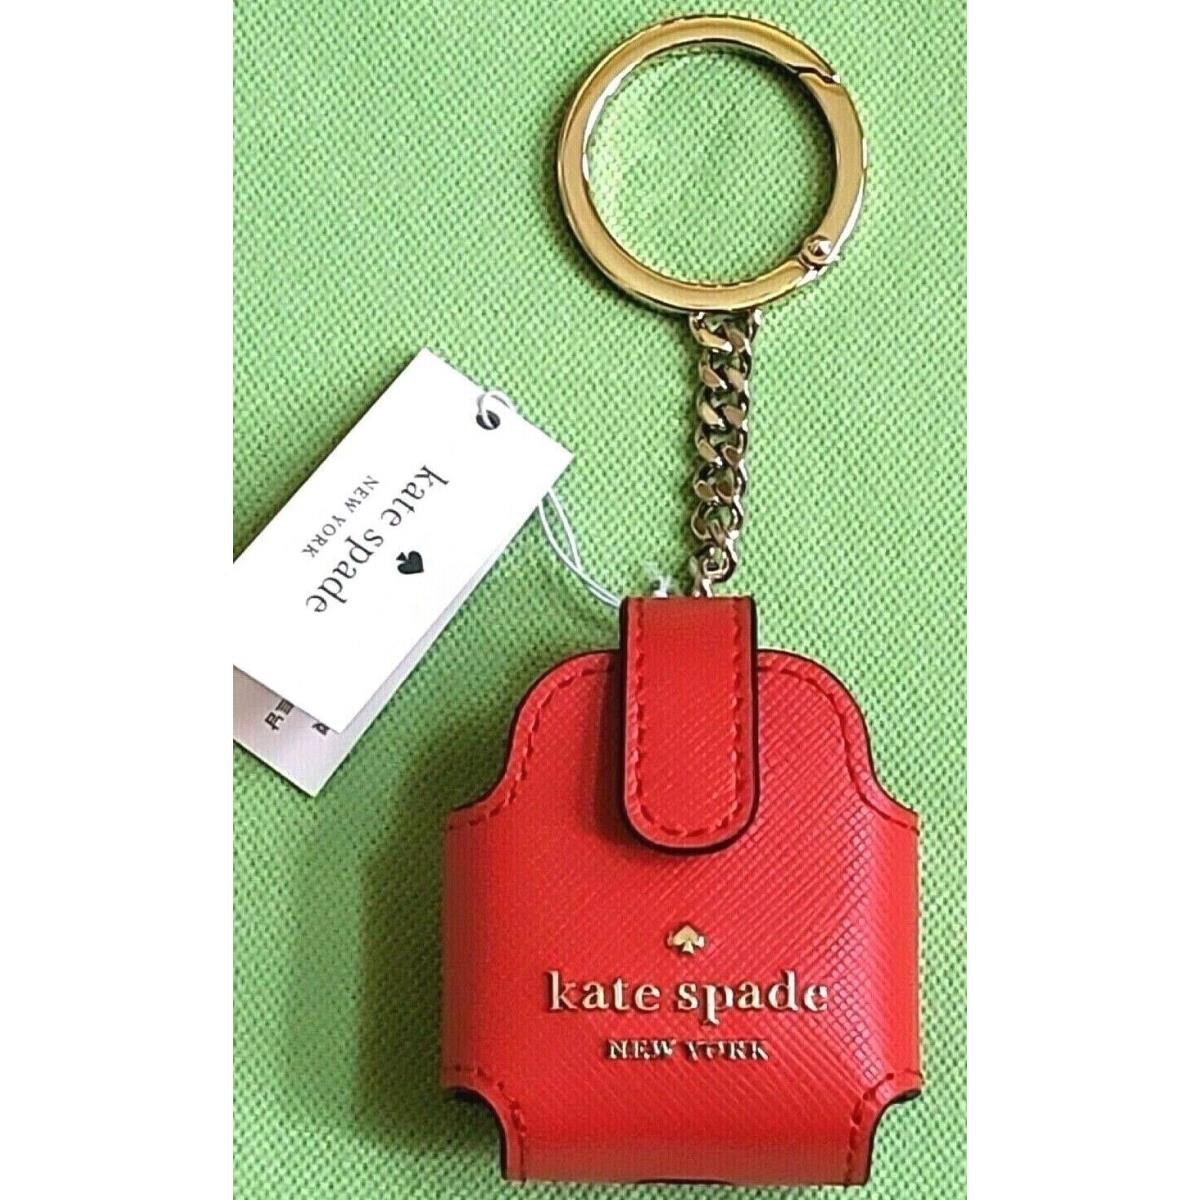 Kate Spade Staci Airpods Case Key Fob Bag Charm:nwt Gazpacho